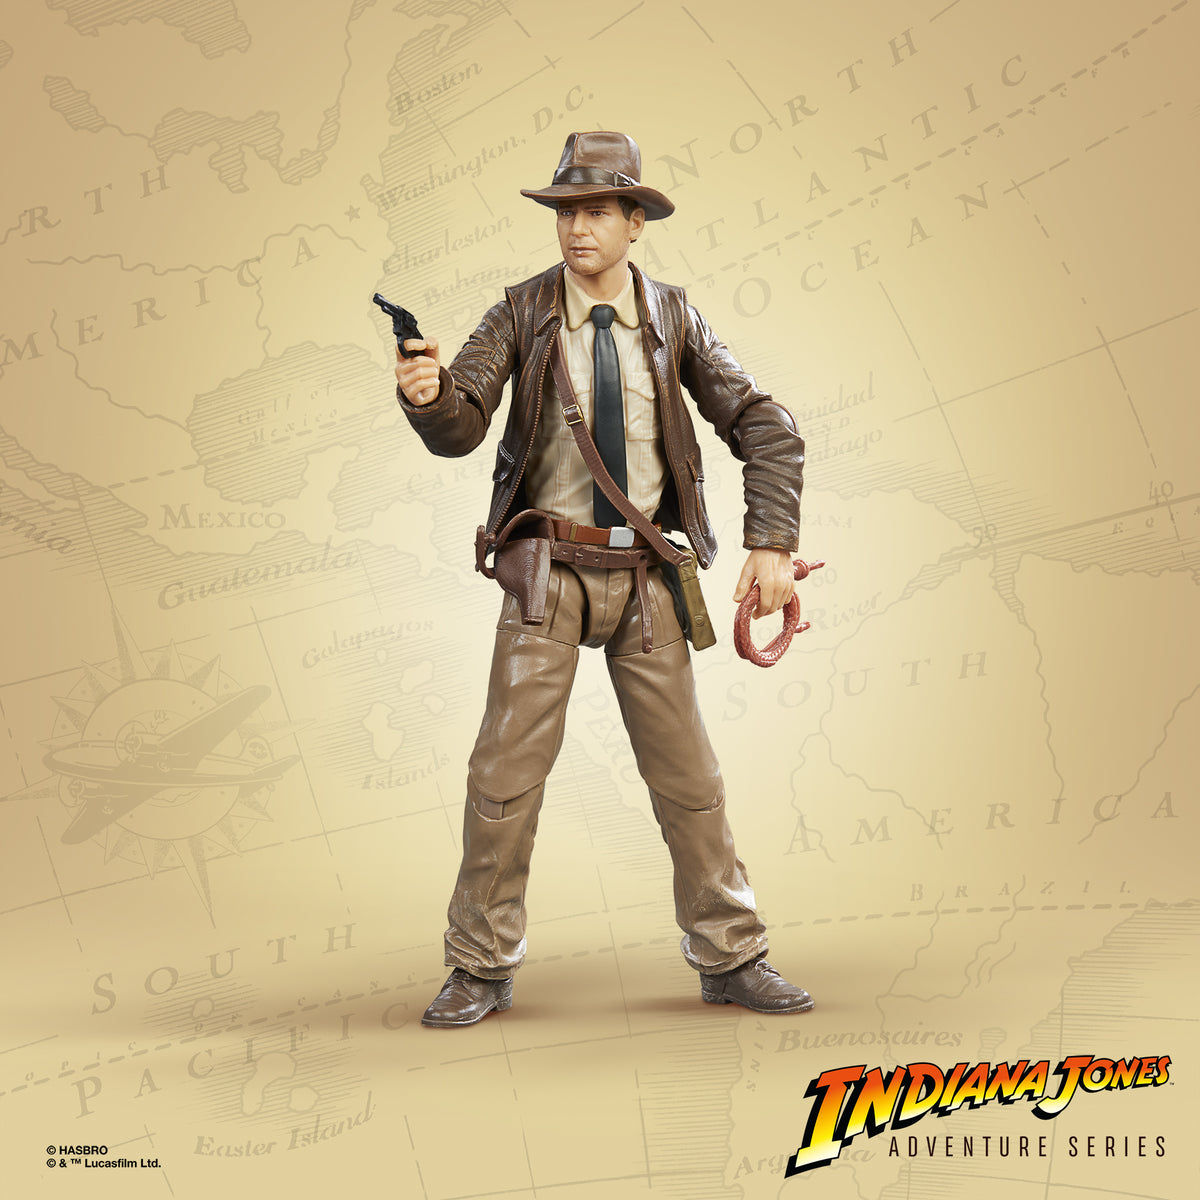 Indiana Jones Adventure Series Indiana Jones (Last Crusade) – Hasbro Pulse